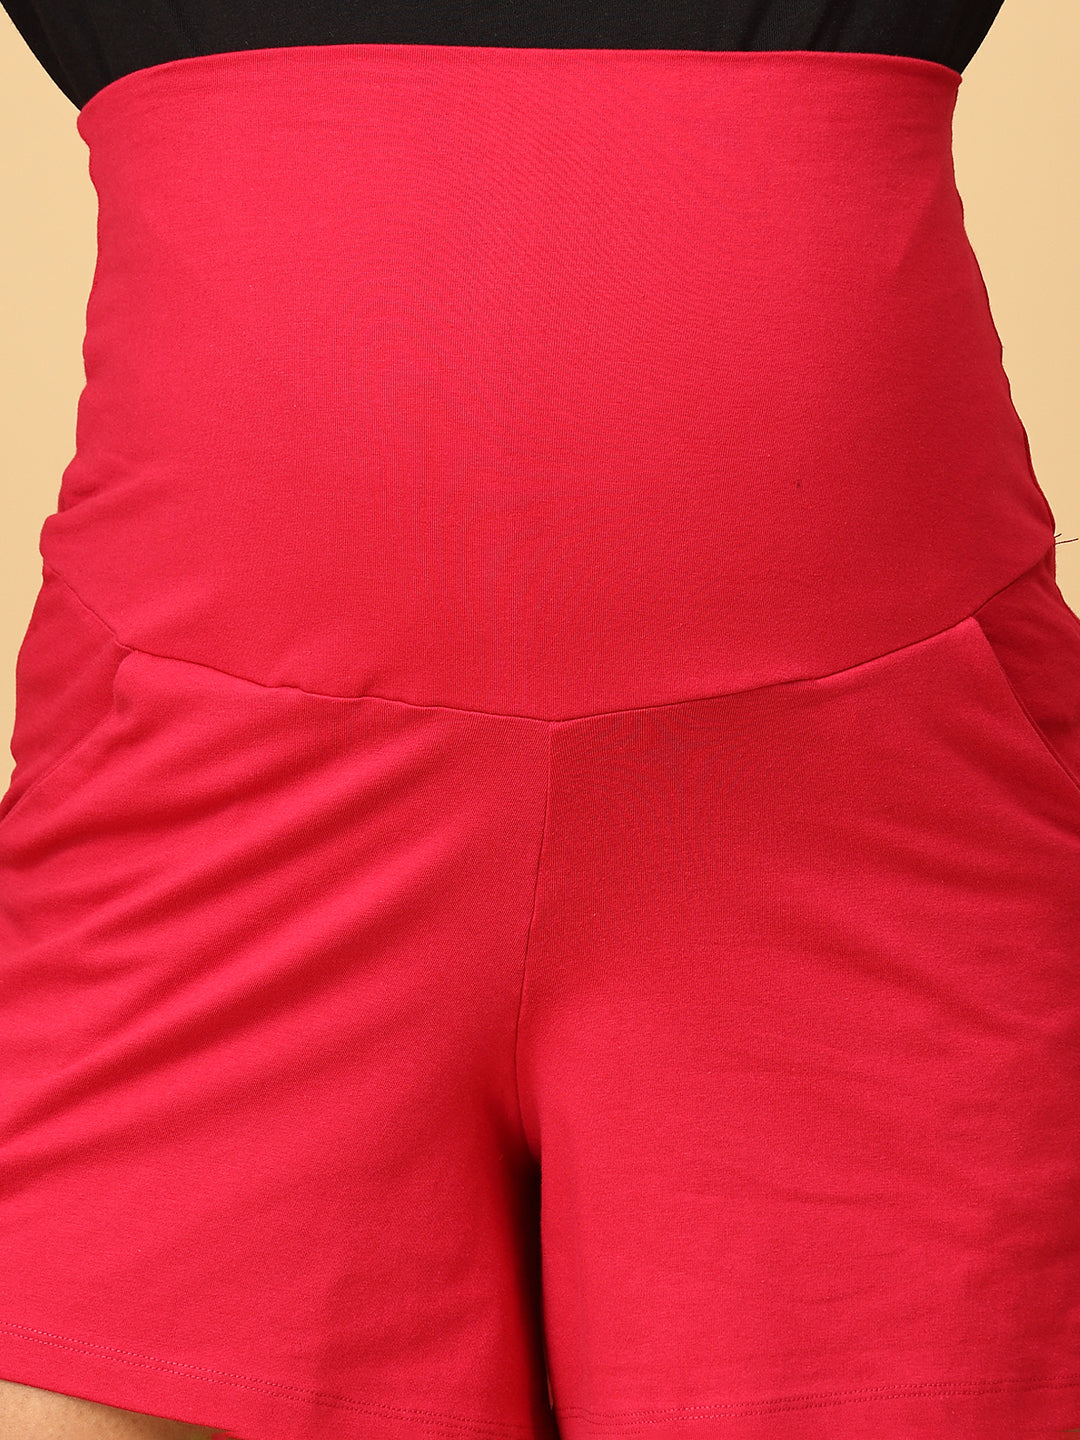 Comfy Maternity Shorts- Magenta